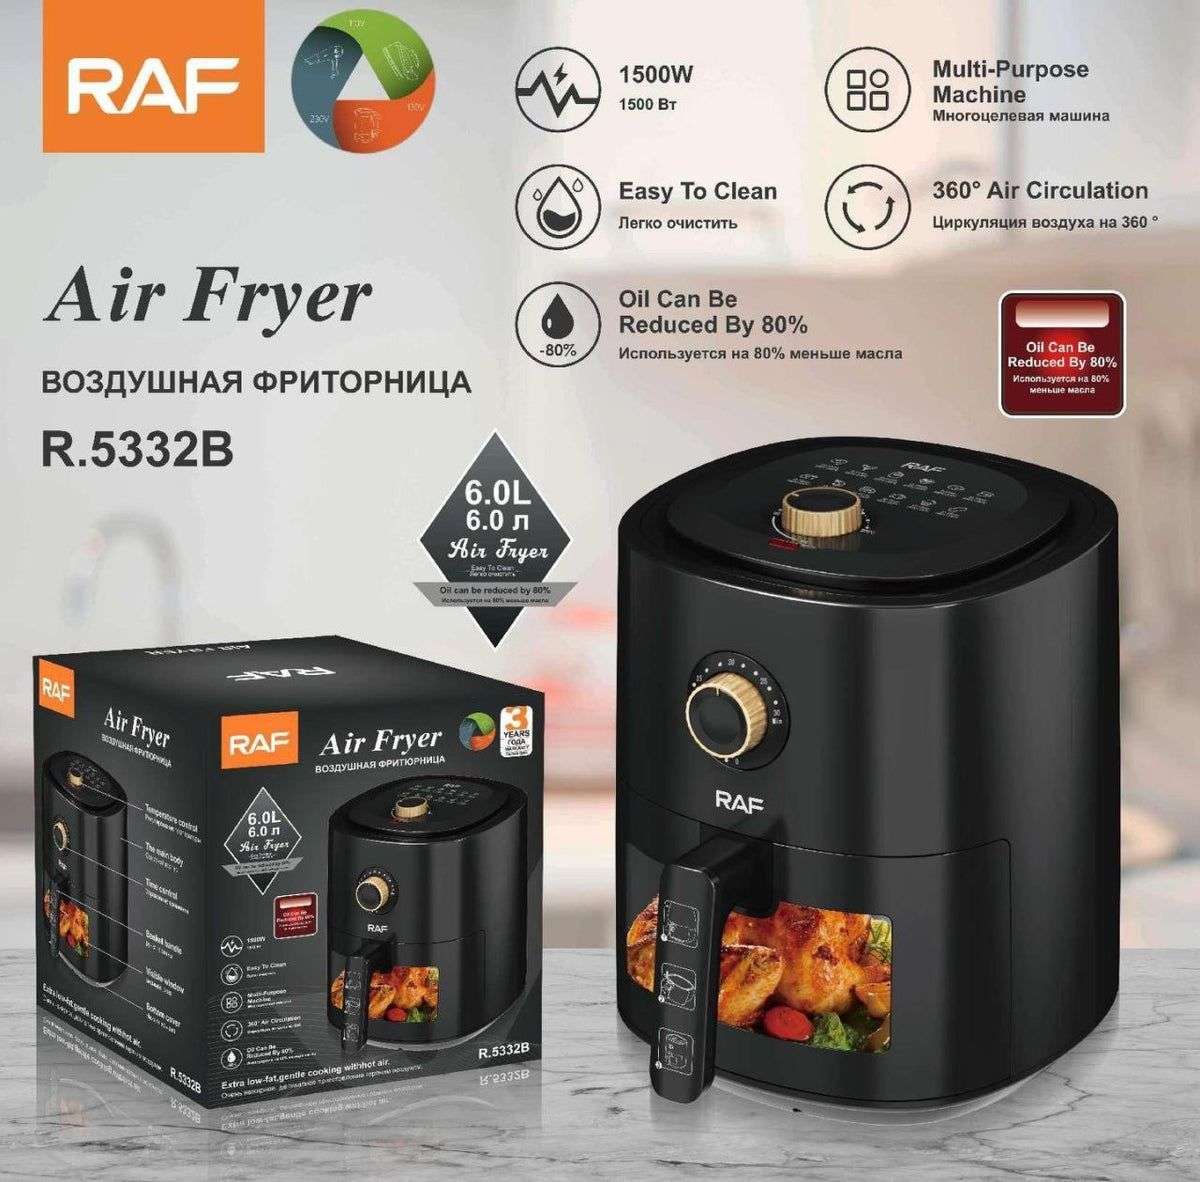 T-Fal Air Fryer Essential, 3.2 Litre / 3.4 Quarts, 1500W, Air Fryer, G